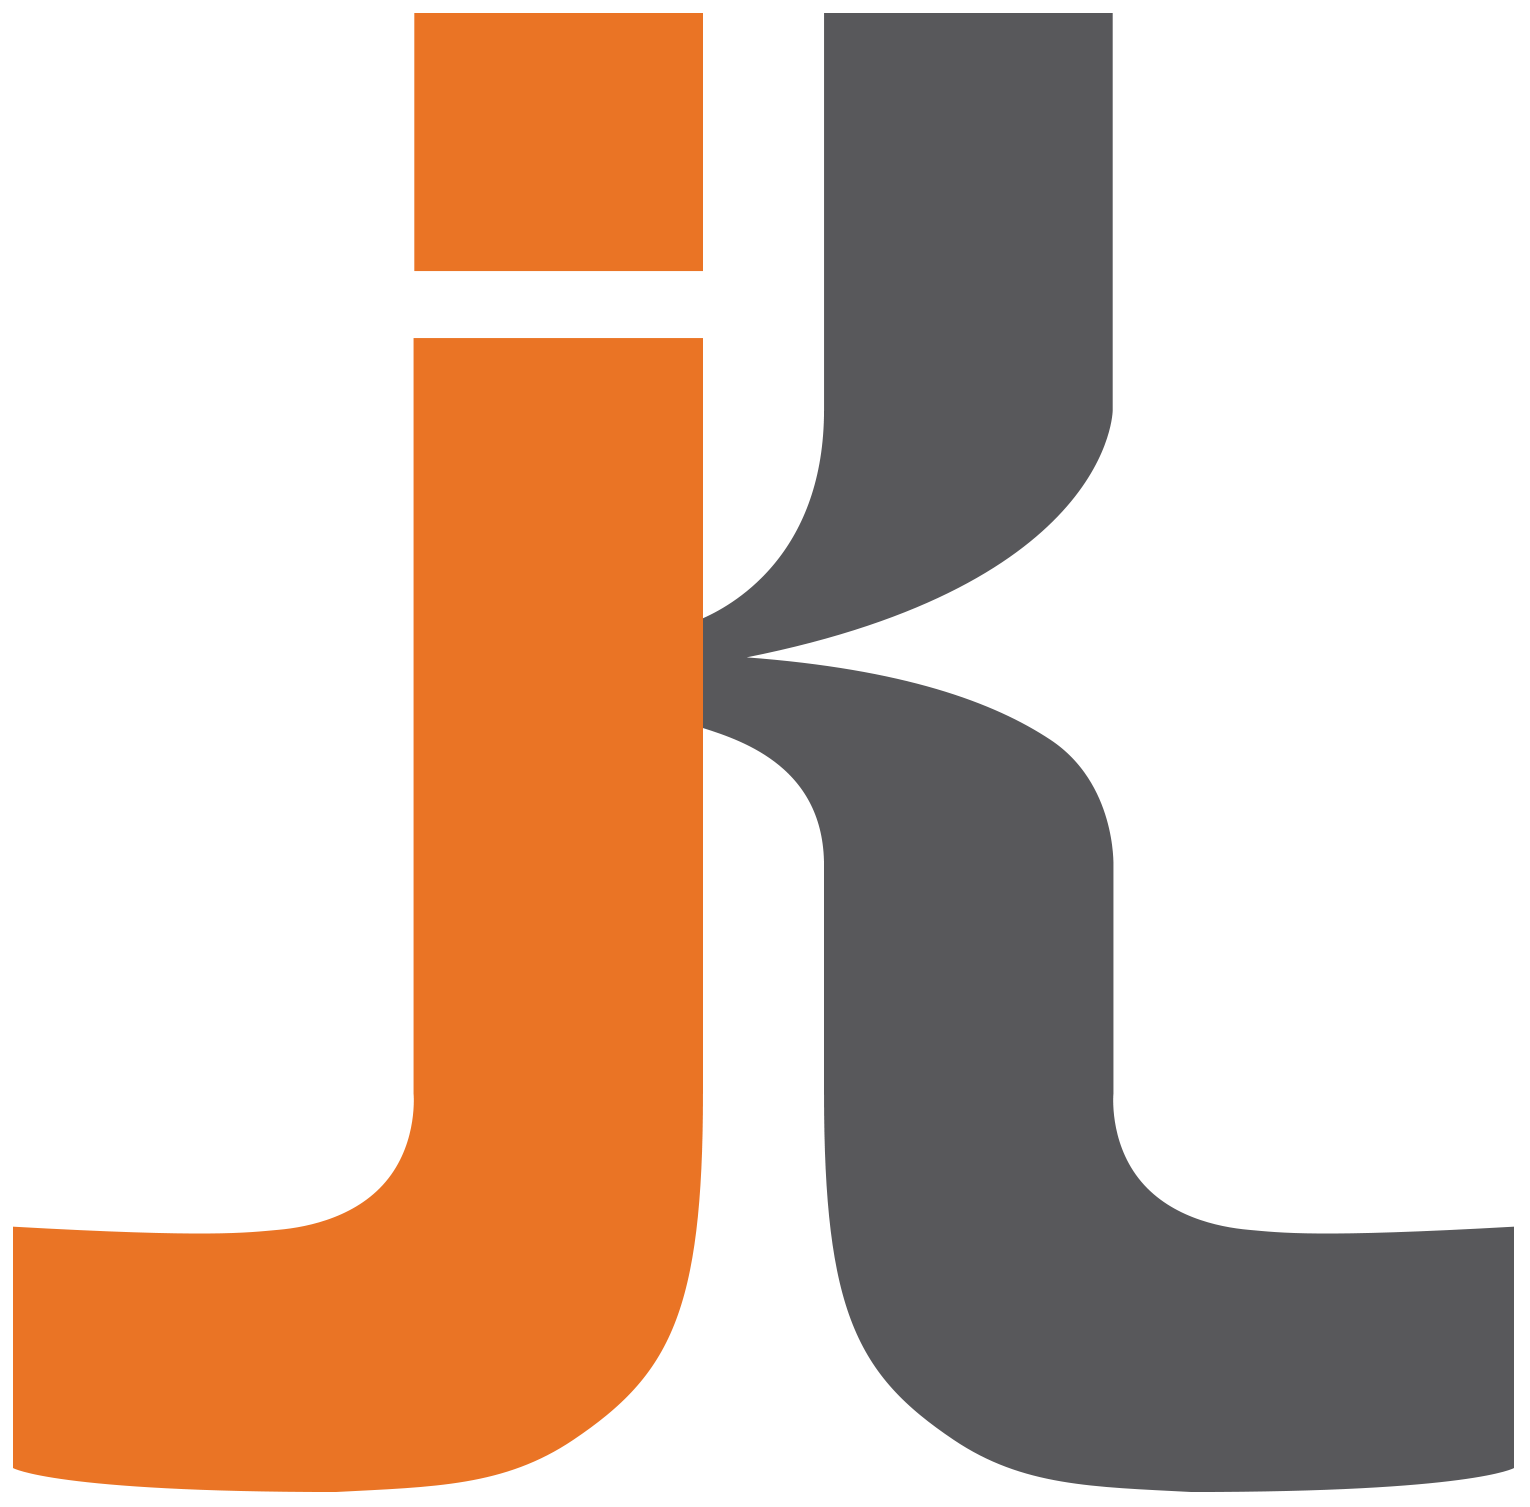 JK logo